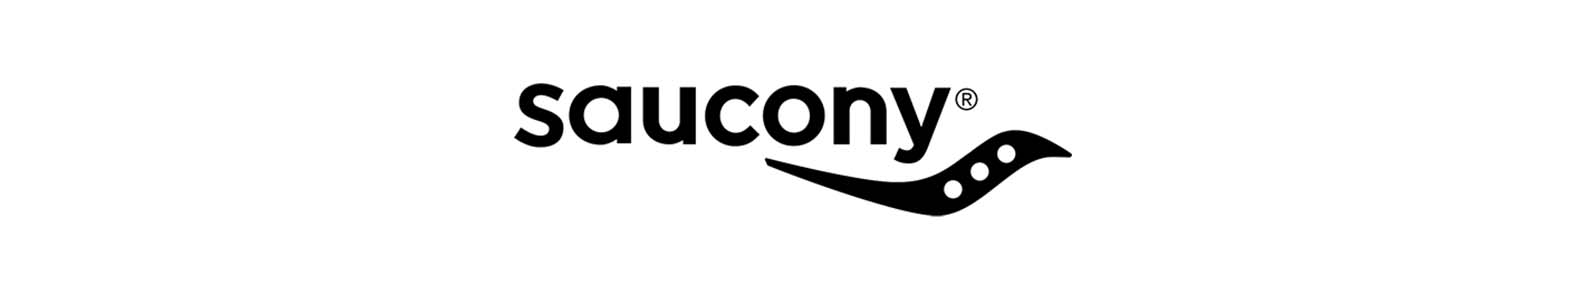 Saucony brand header image